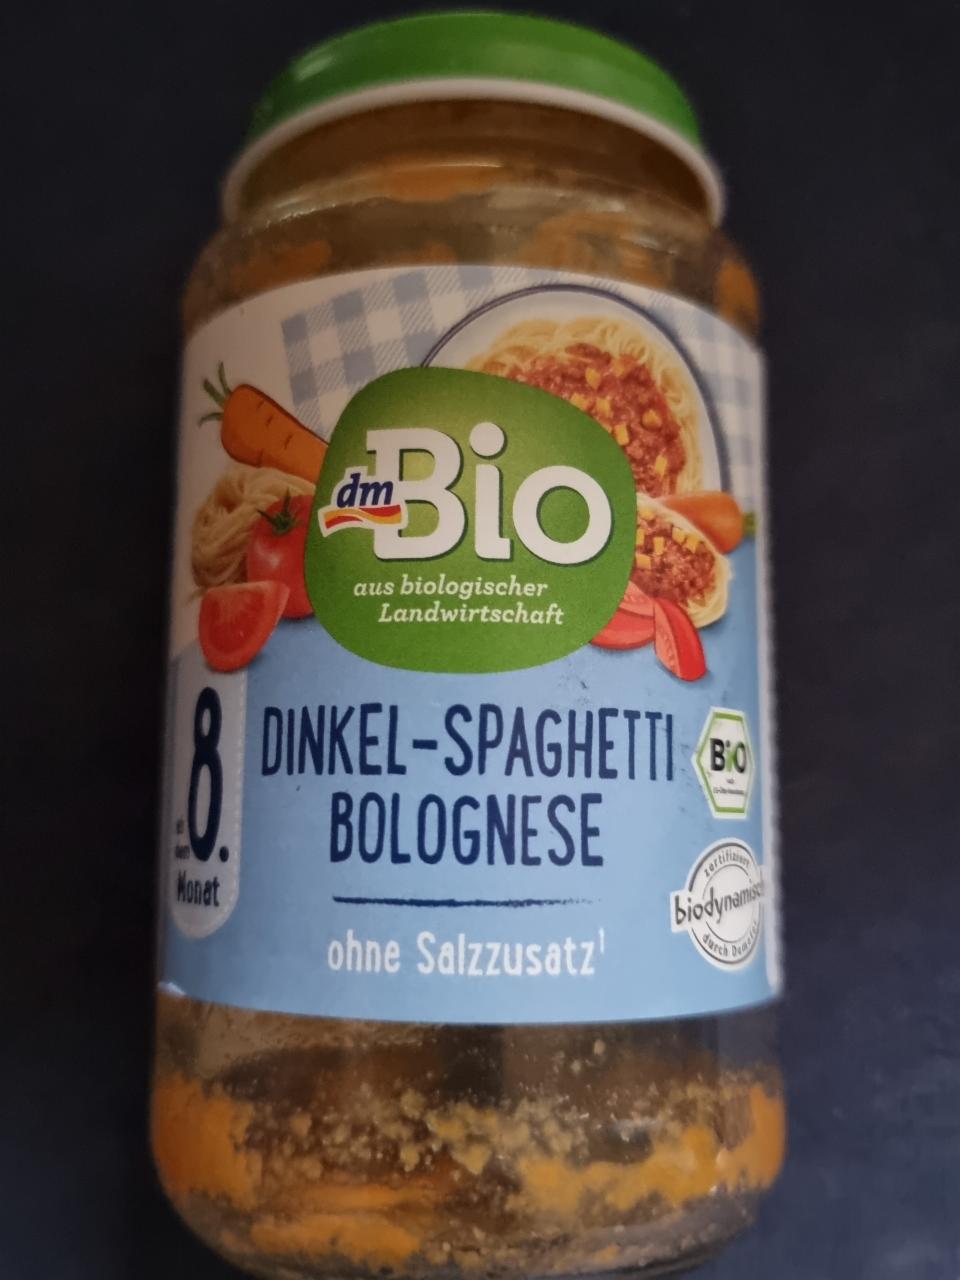 Fotografie - Dinkel-Spaghetti Bolognese příkrm dmBio